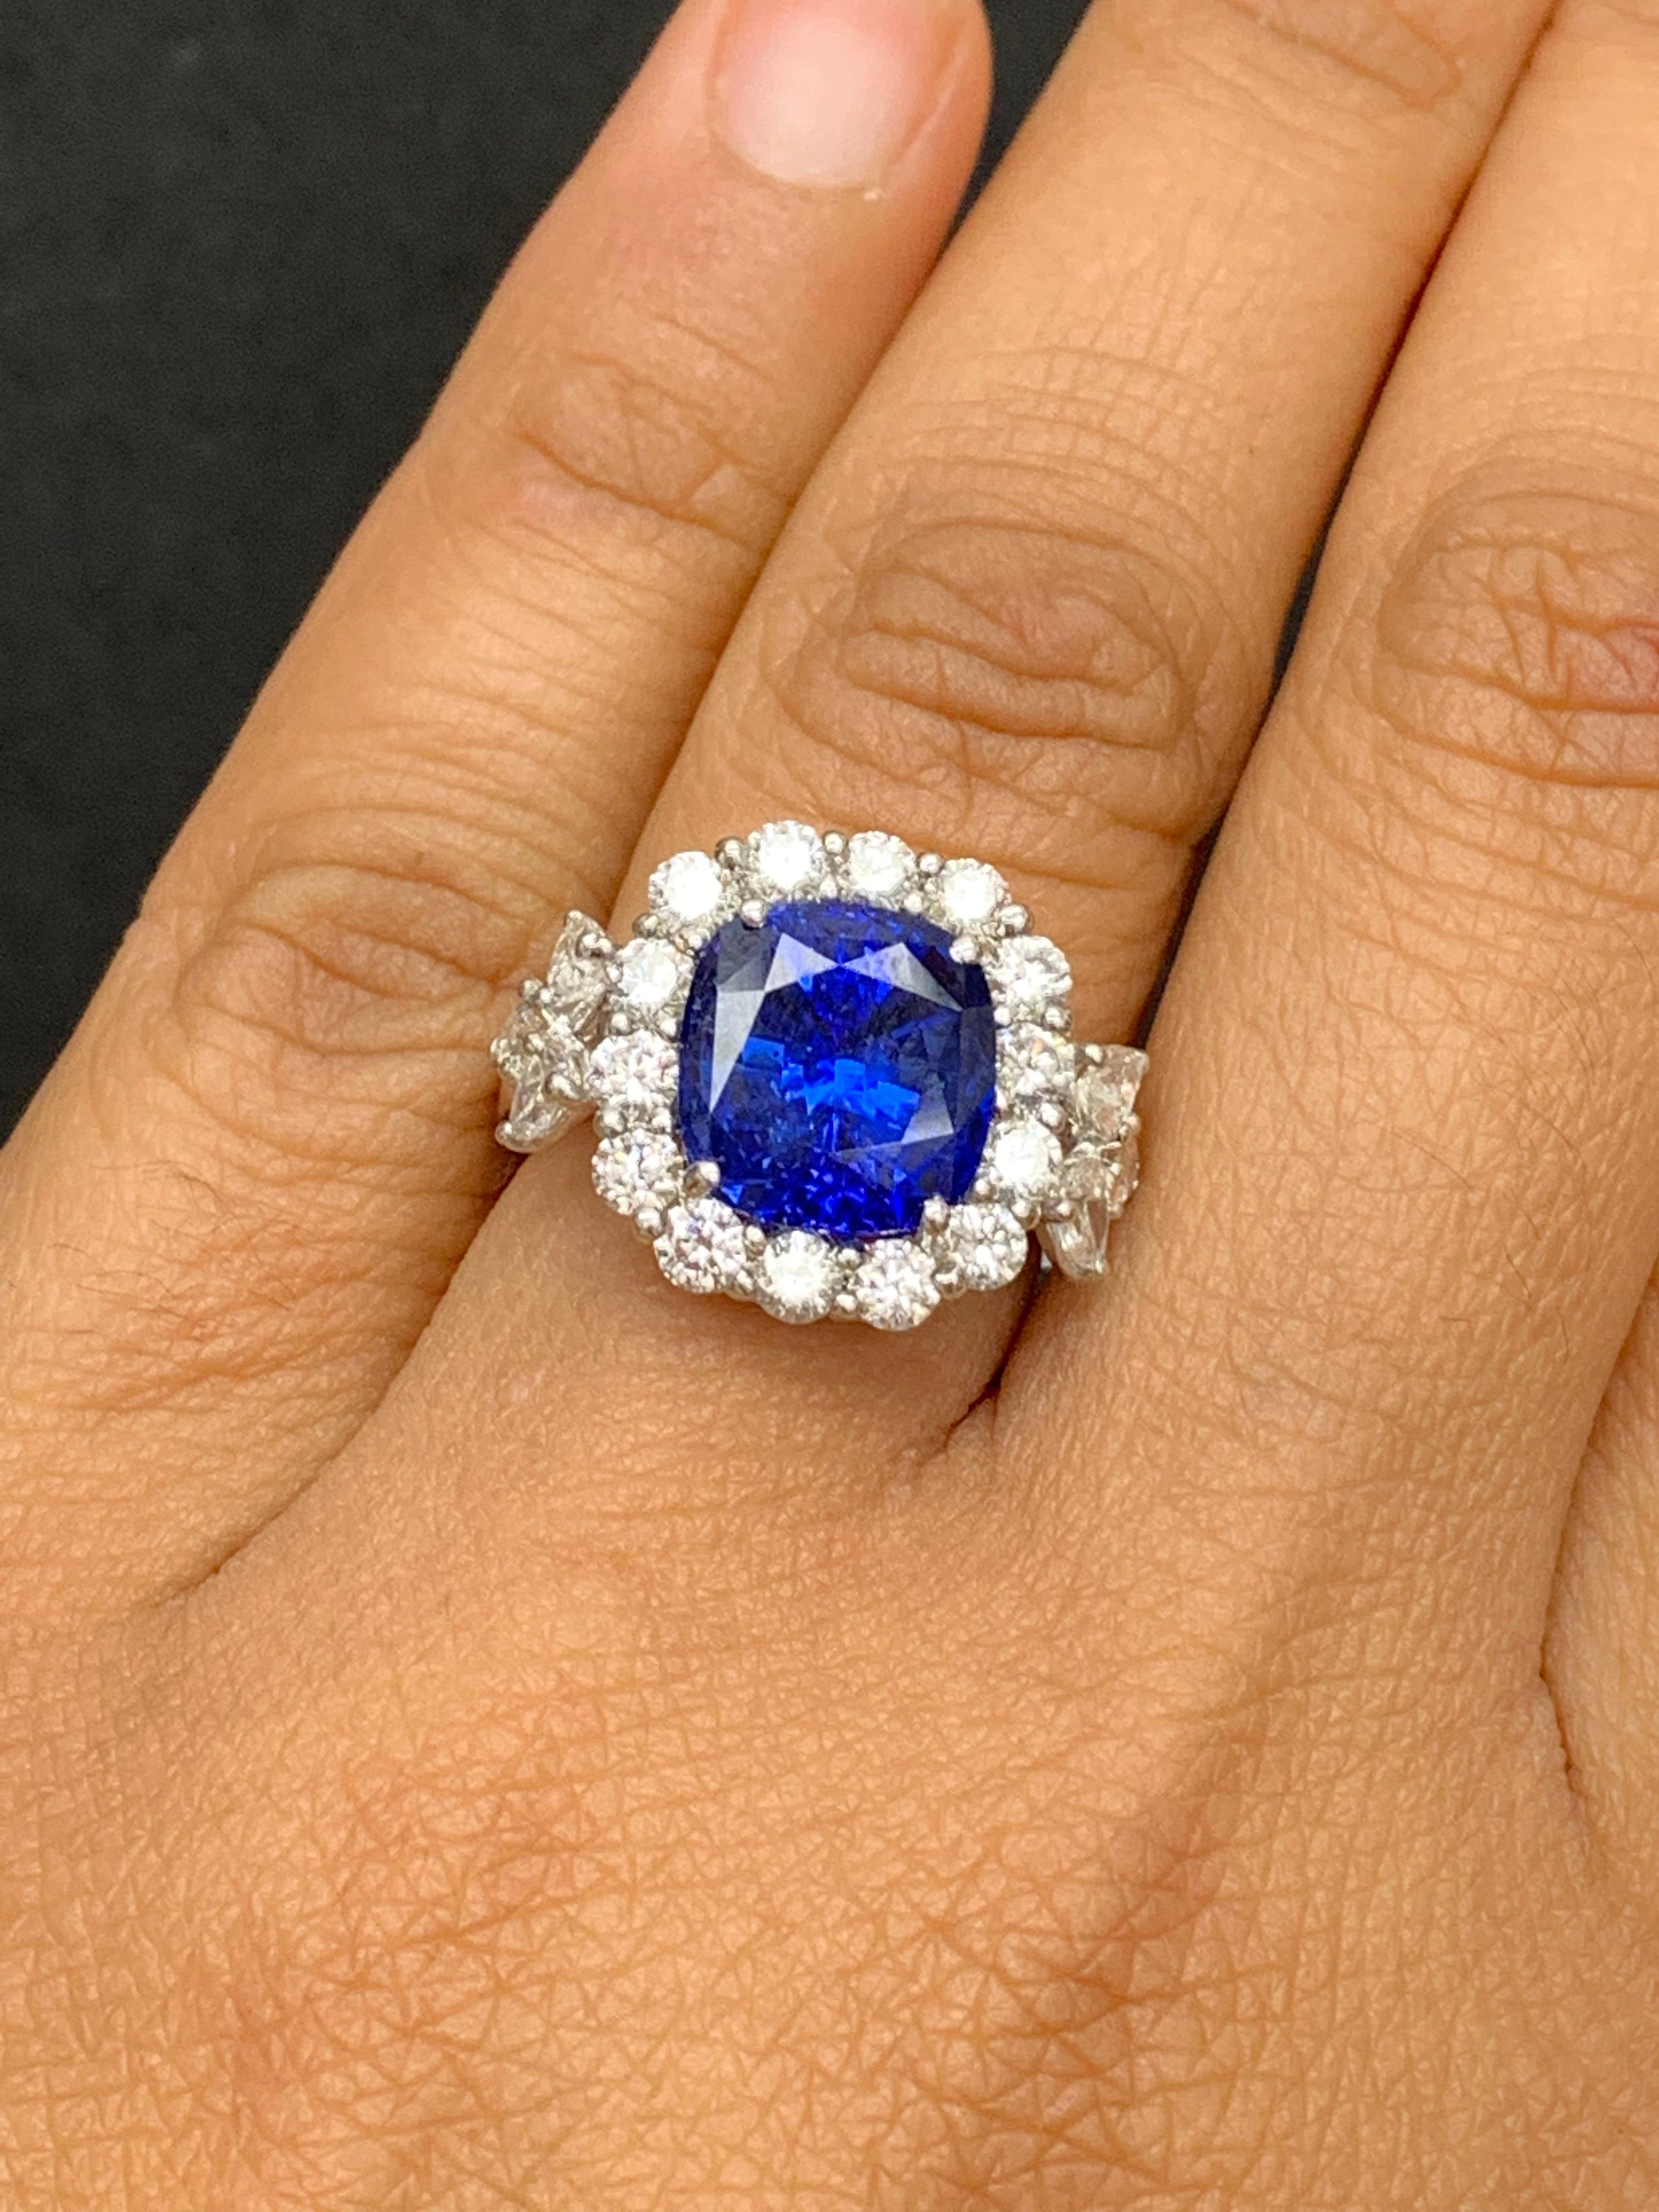 6.61 Carat Cushion Cut Blue Sapphire Diamond Engagement Ring in Platinum For Sale 4